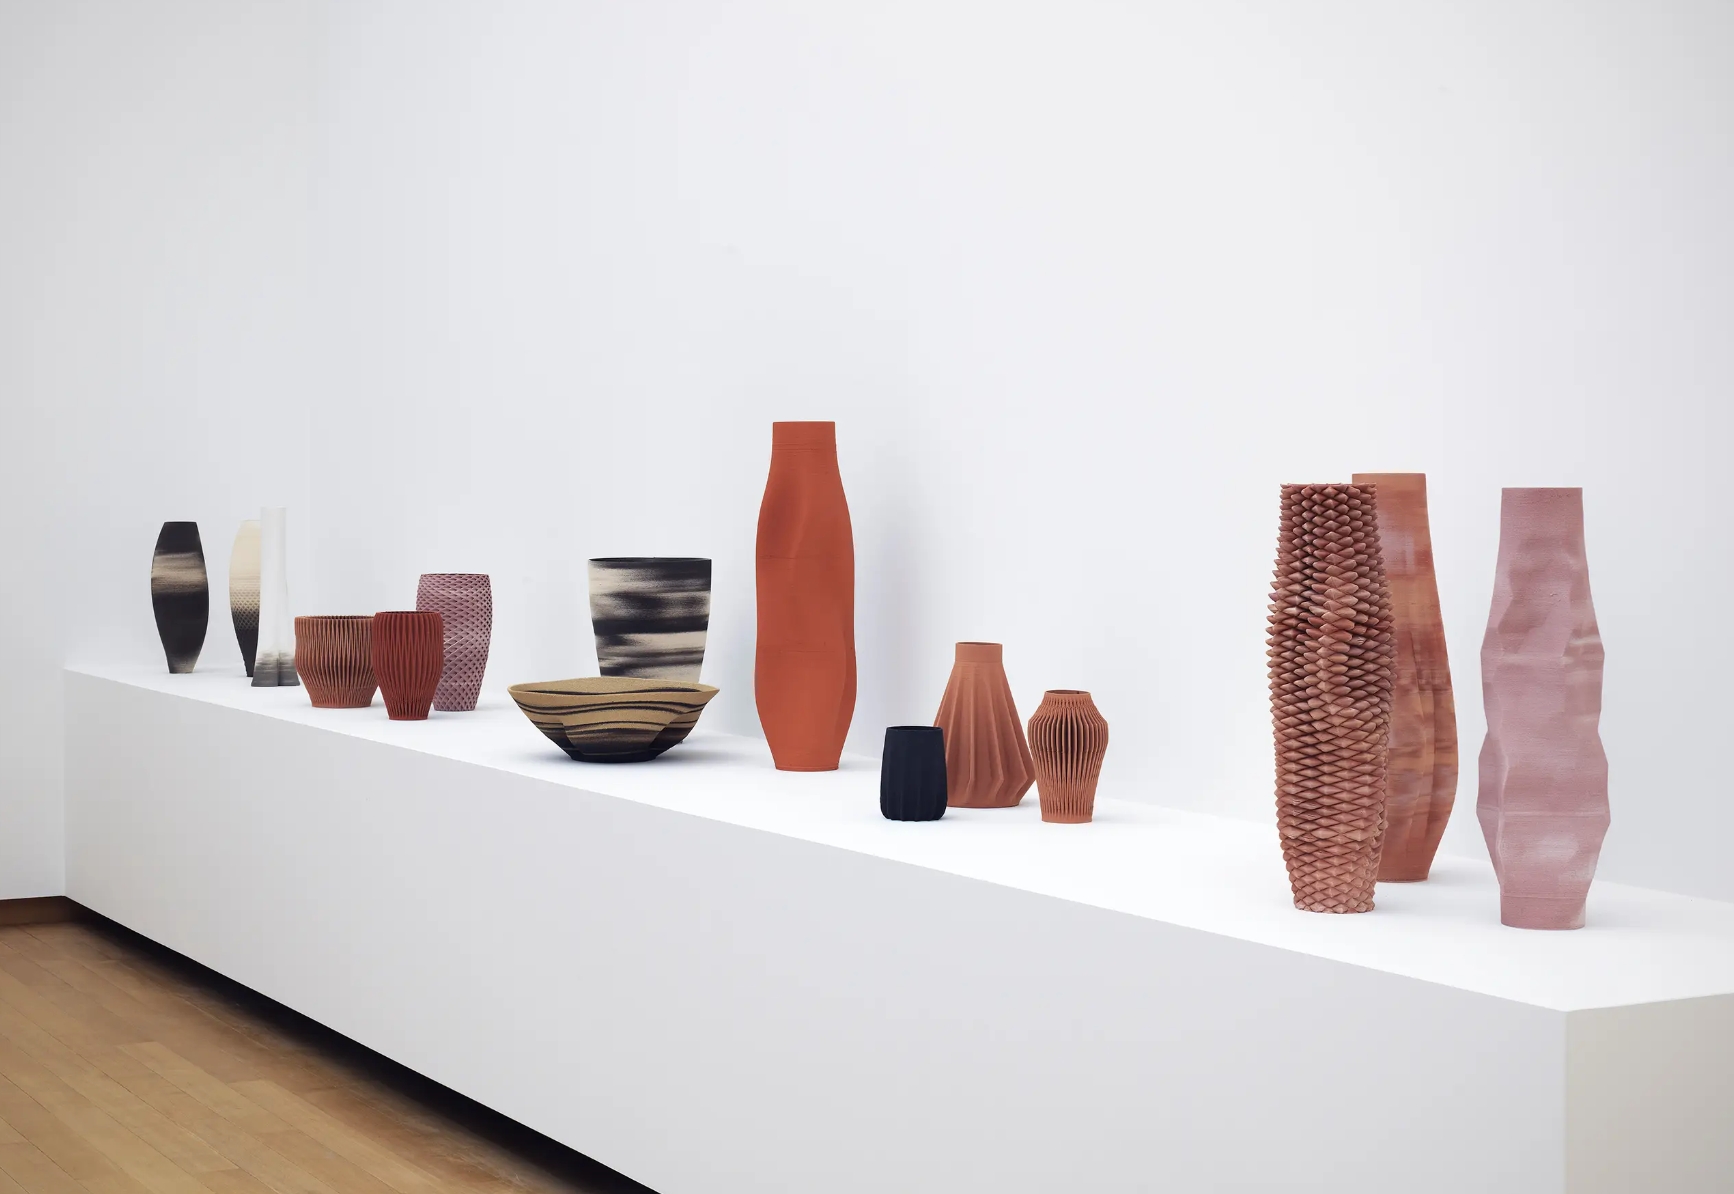 Olivier van Herpt 3D-printed Ceramic Objects